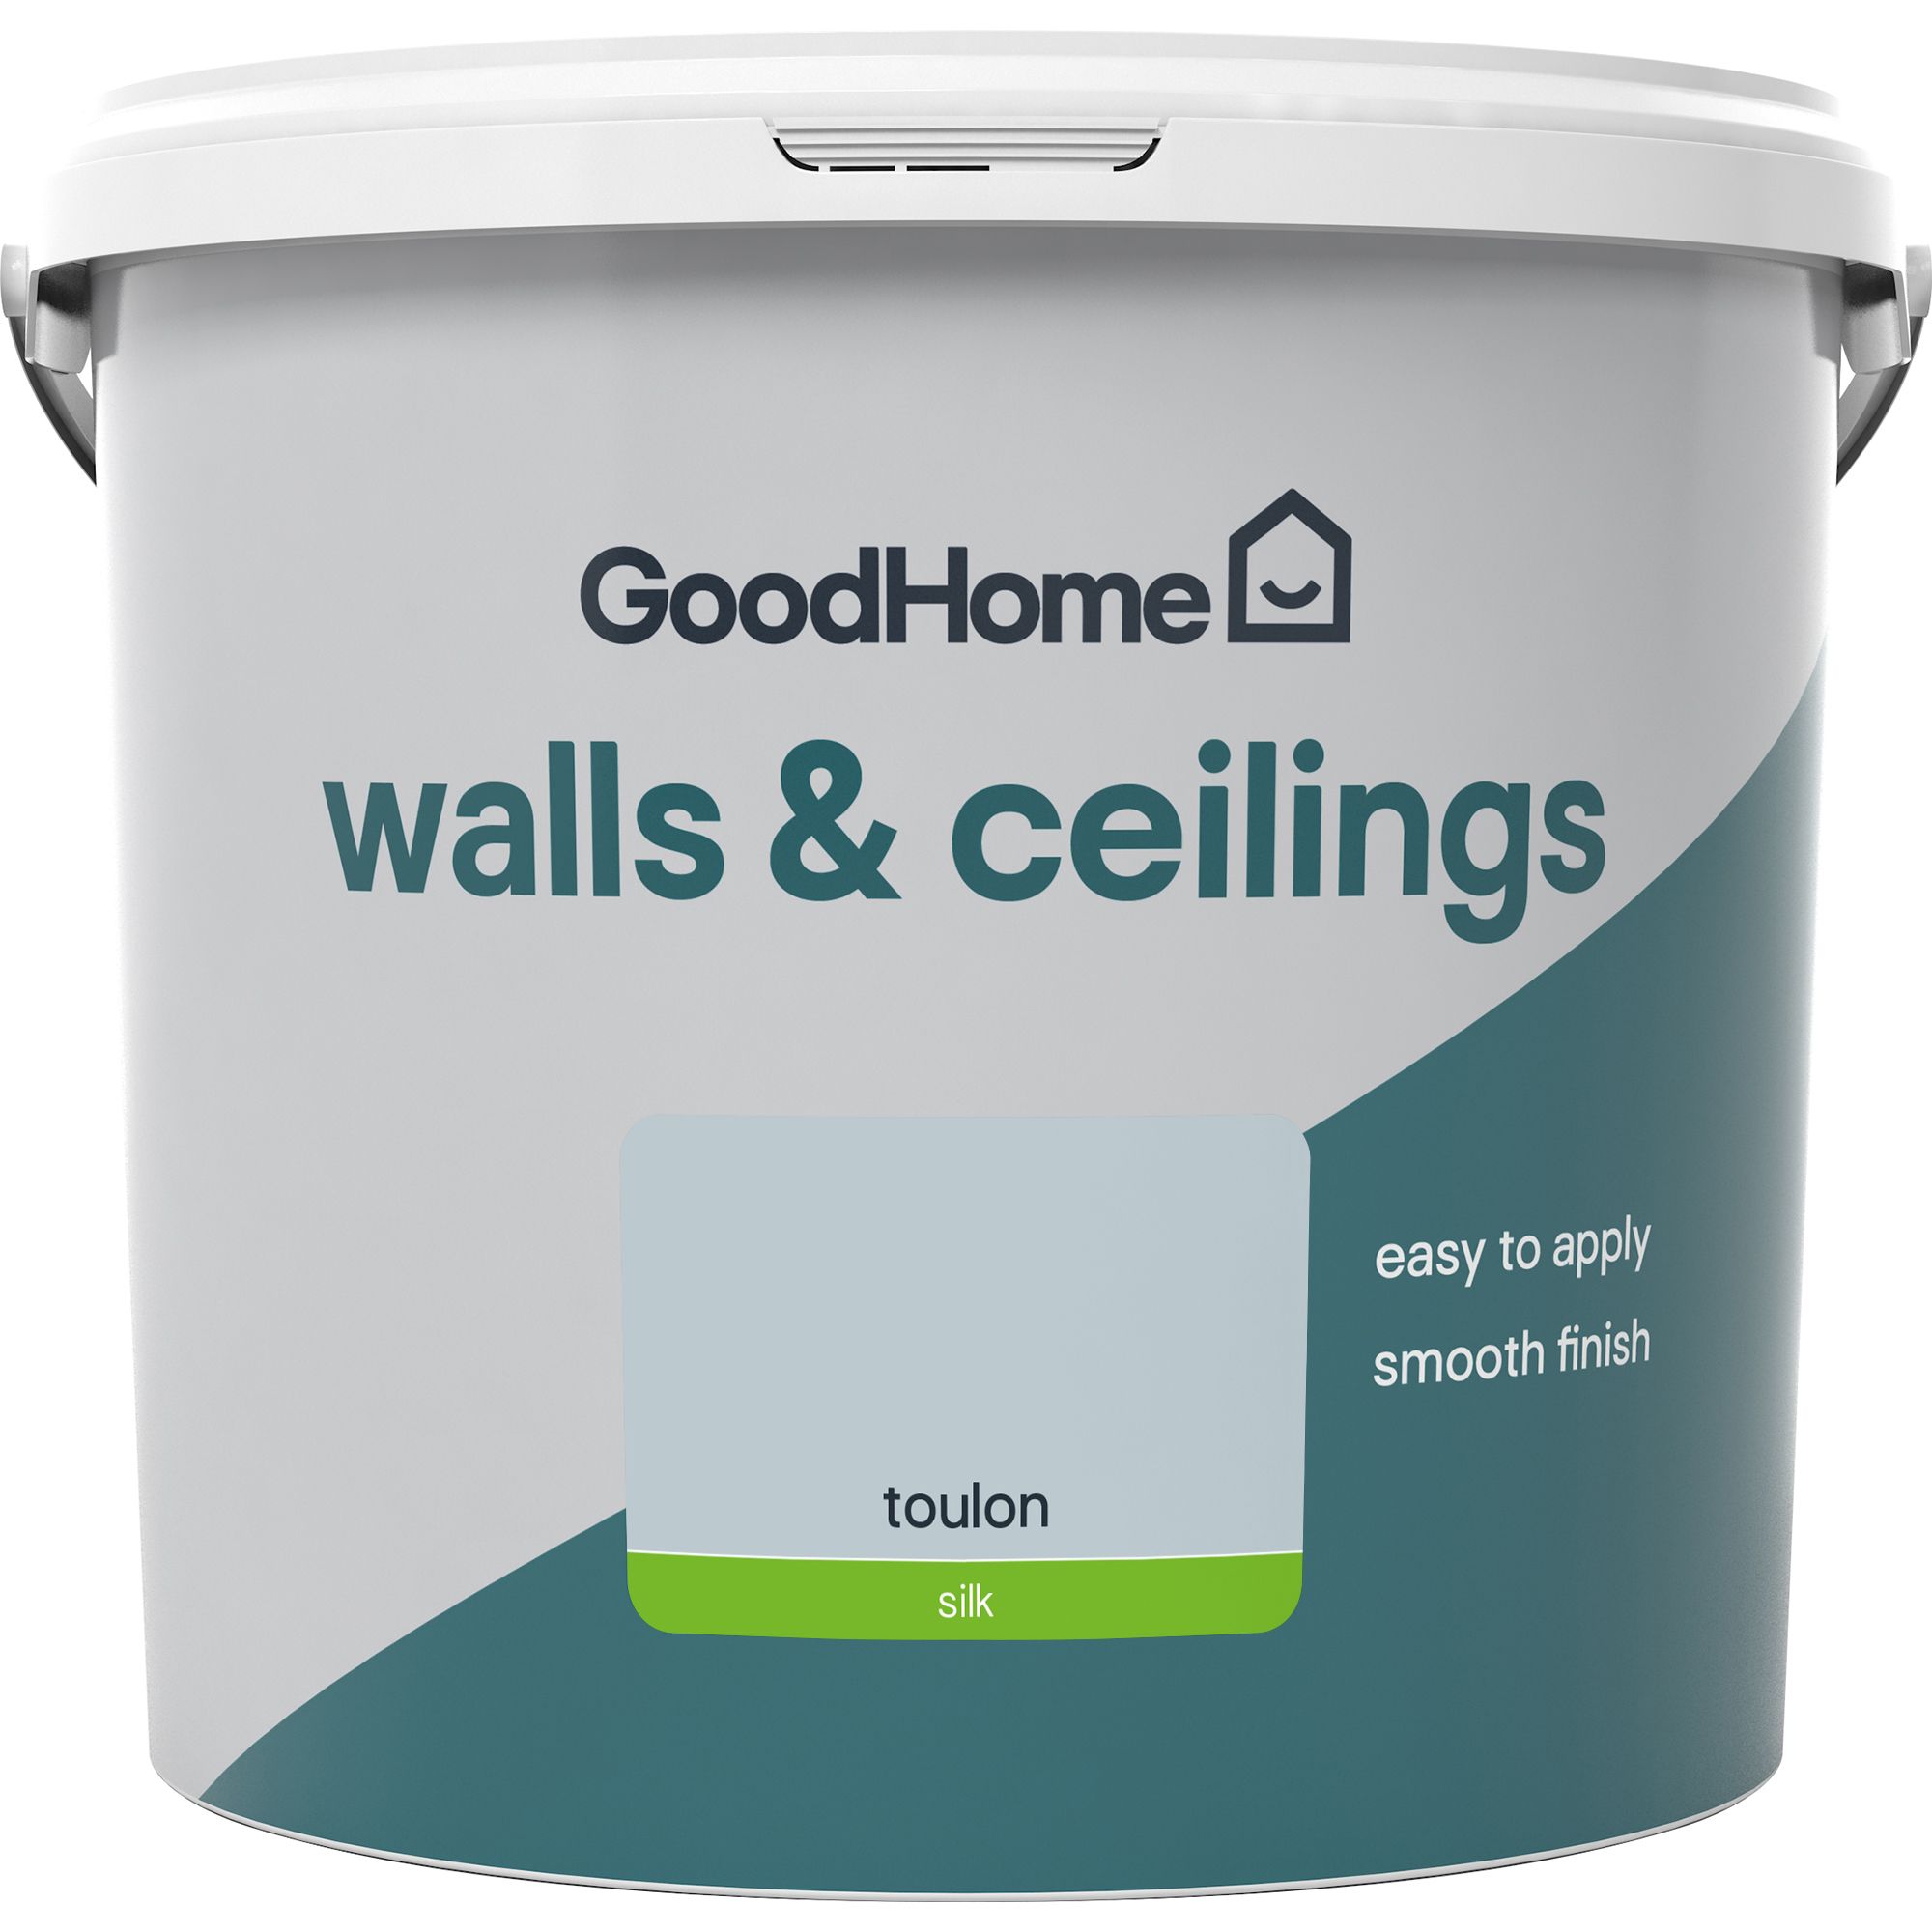 GoodHome Walls & ceilings Toulon Silk Emulsion paint, 5L